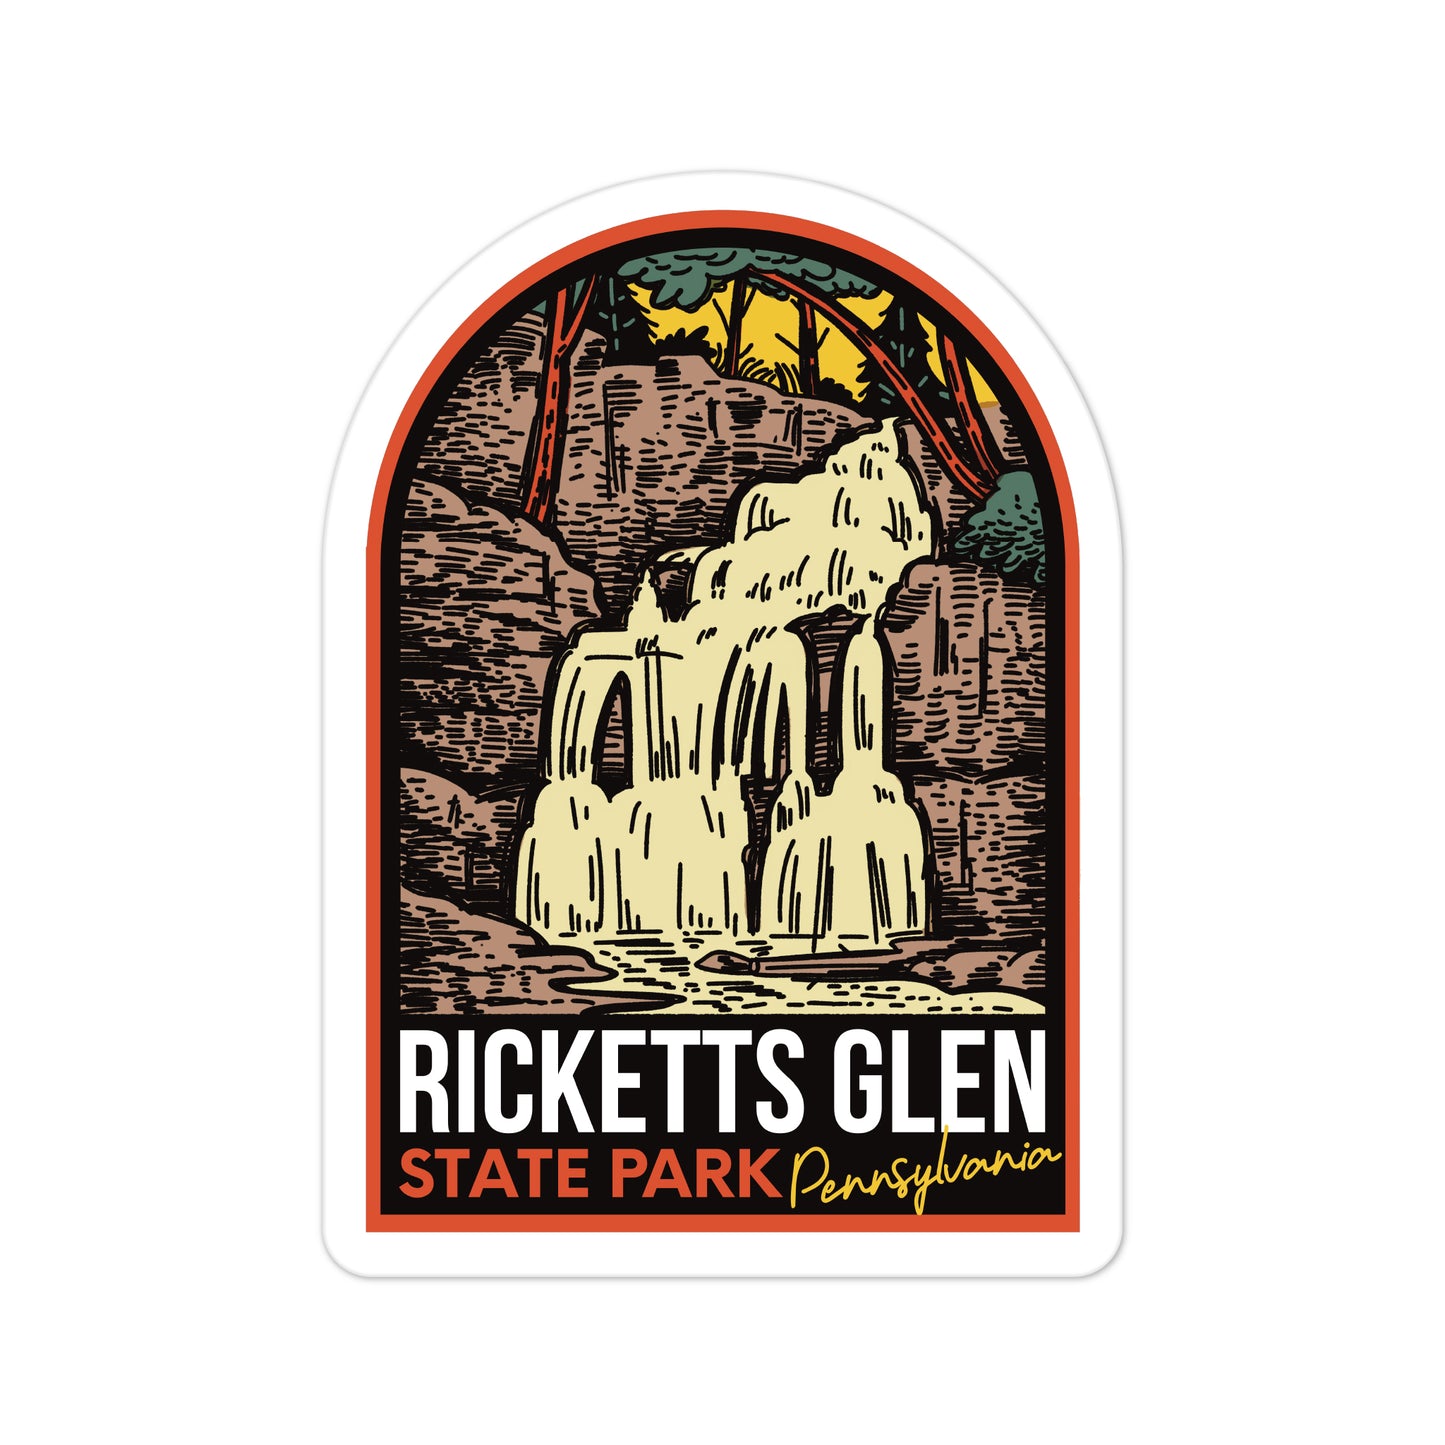 A sticker of Ricketts Glen State Park